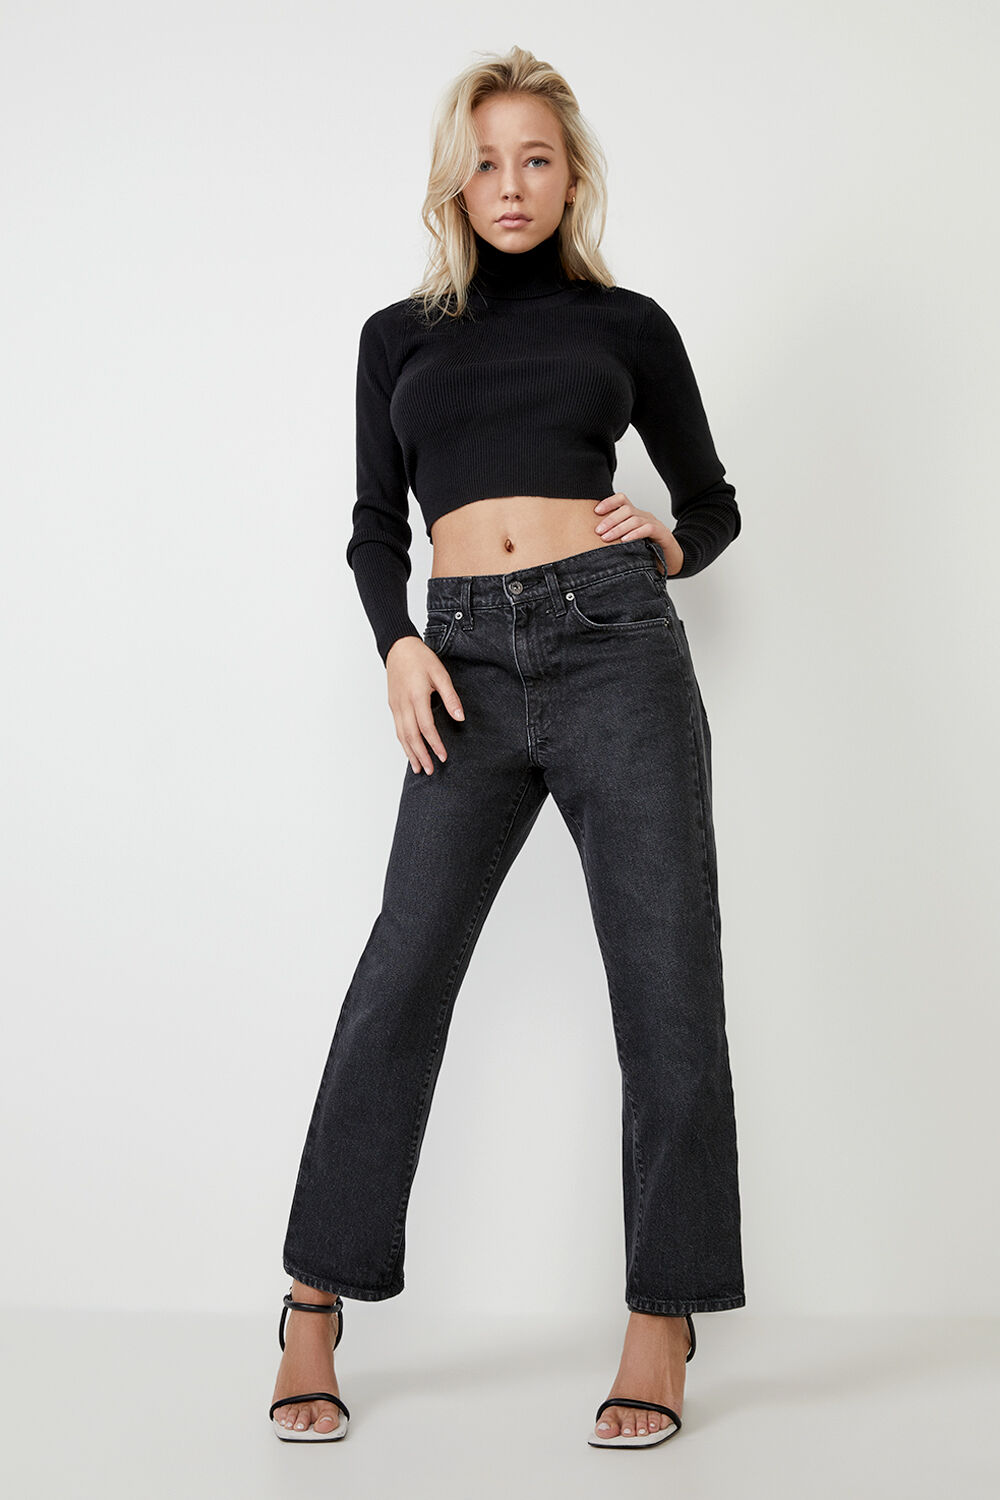 Backless Knit Top in Black | Bardot